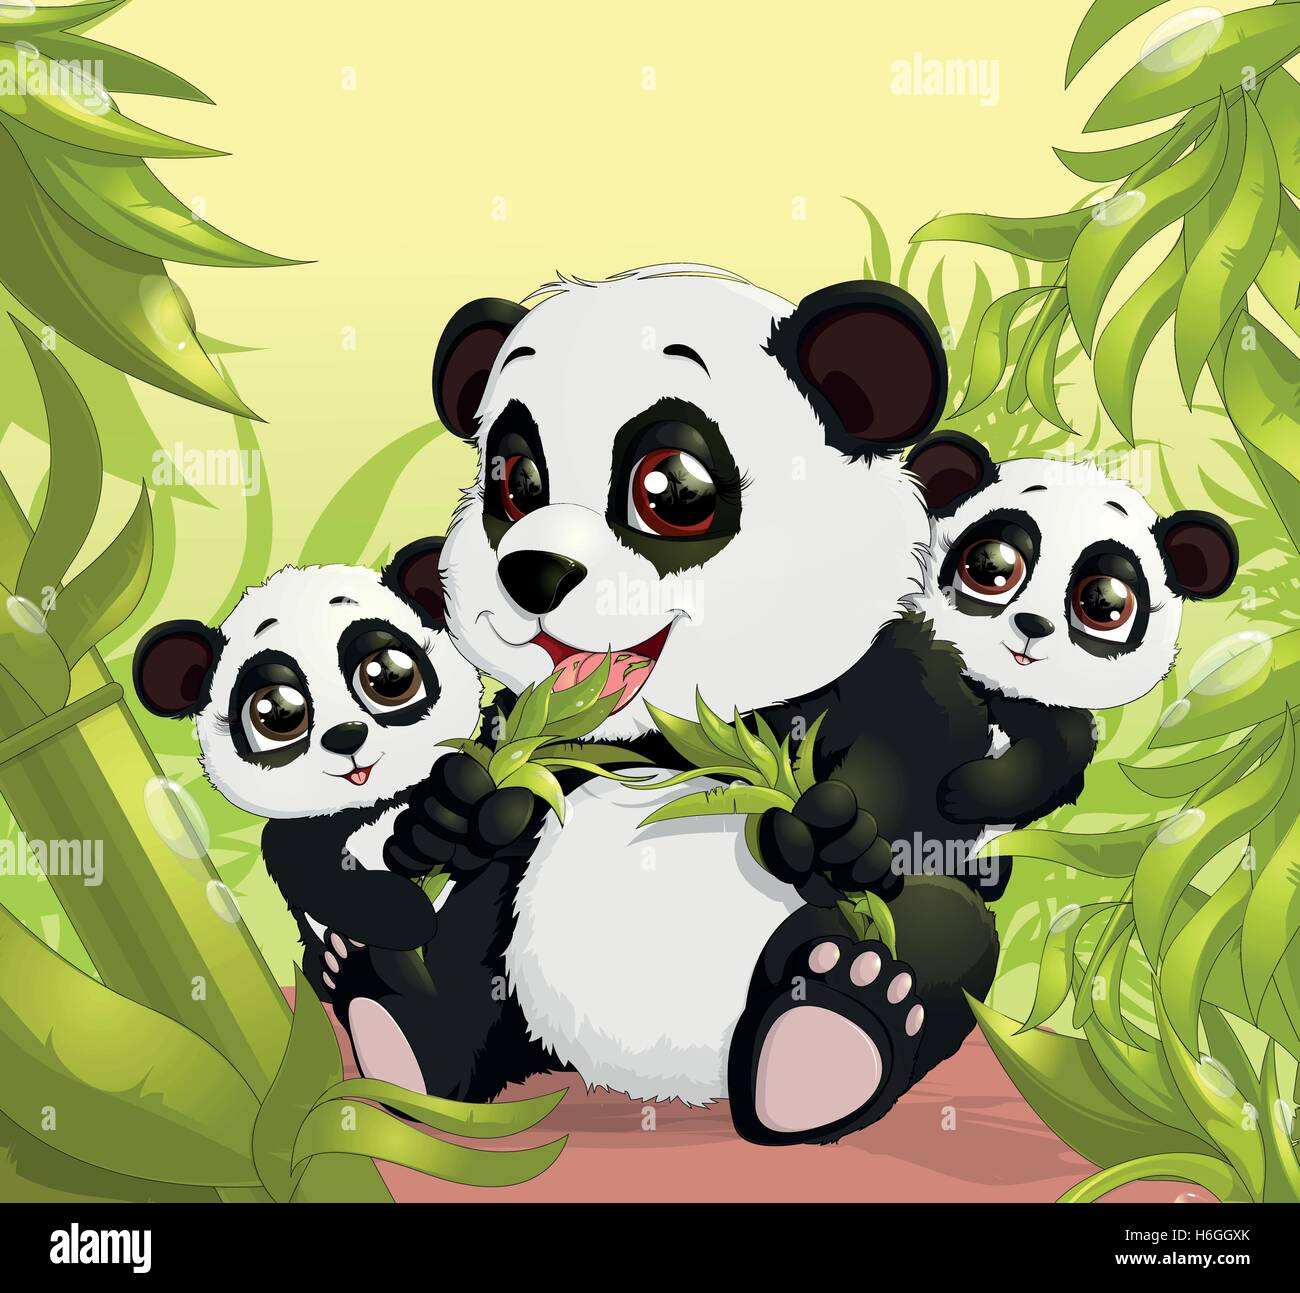 Baby panda bamboo Stock Vector Images - Alamy